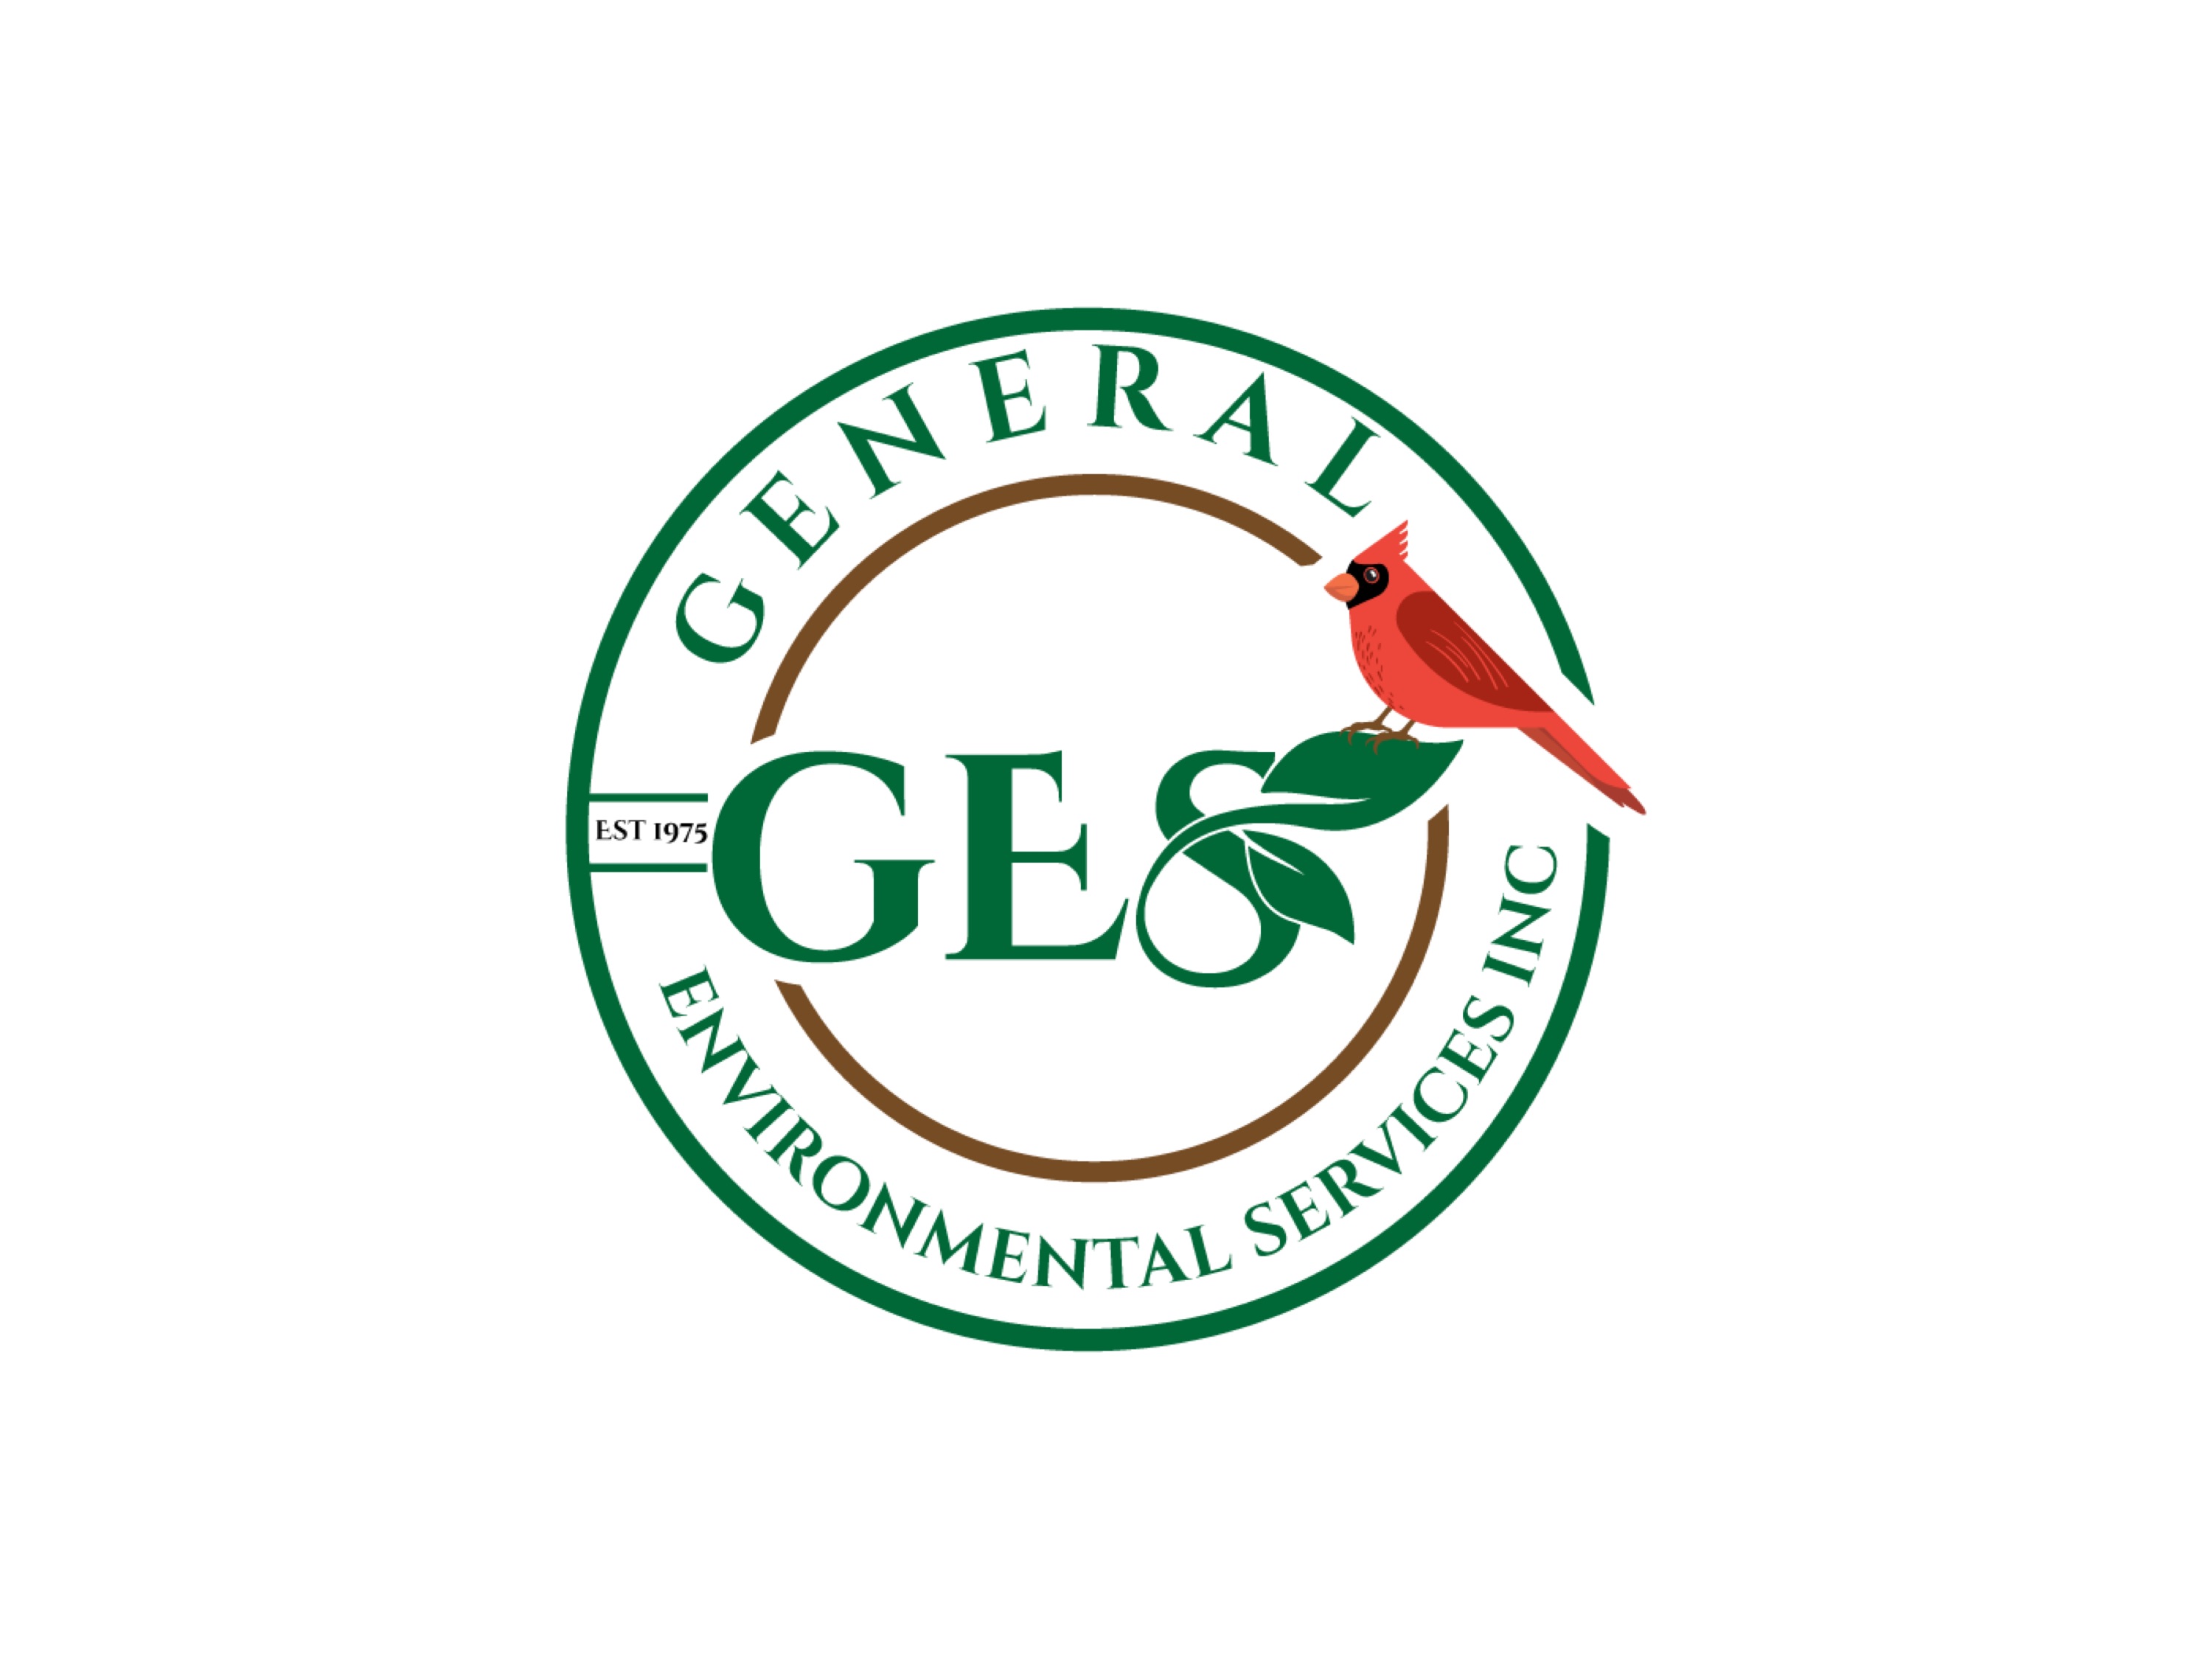 General Environmental Services Logo